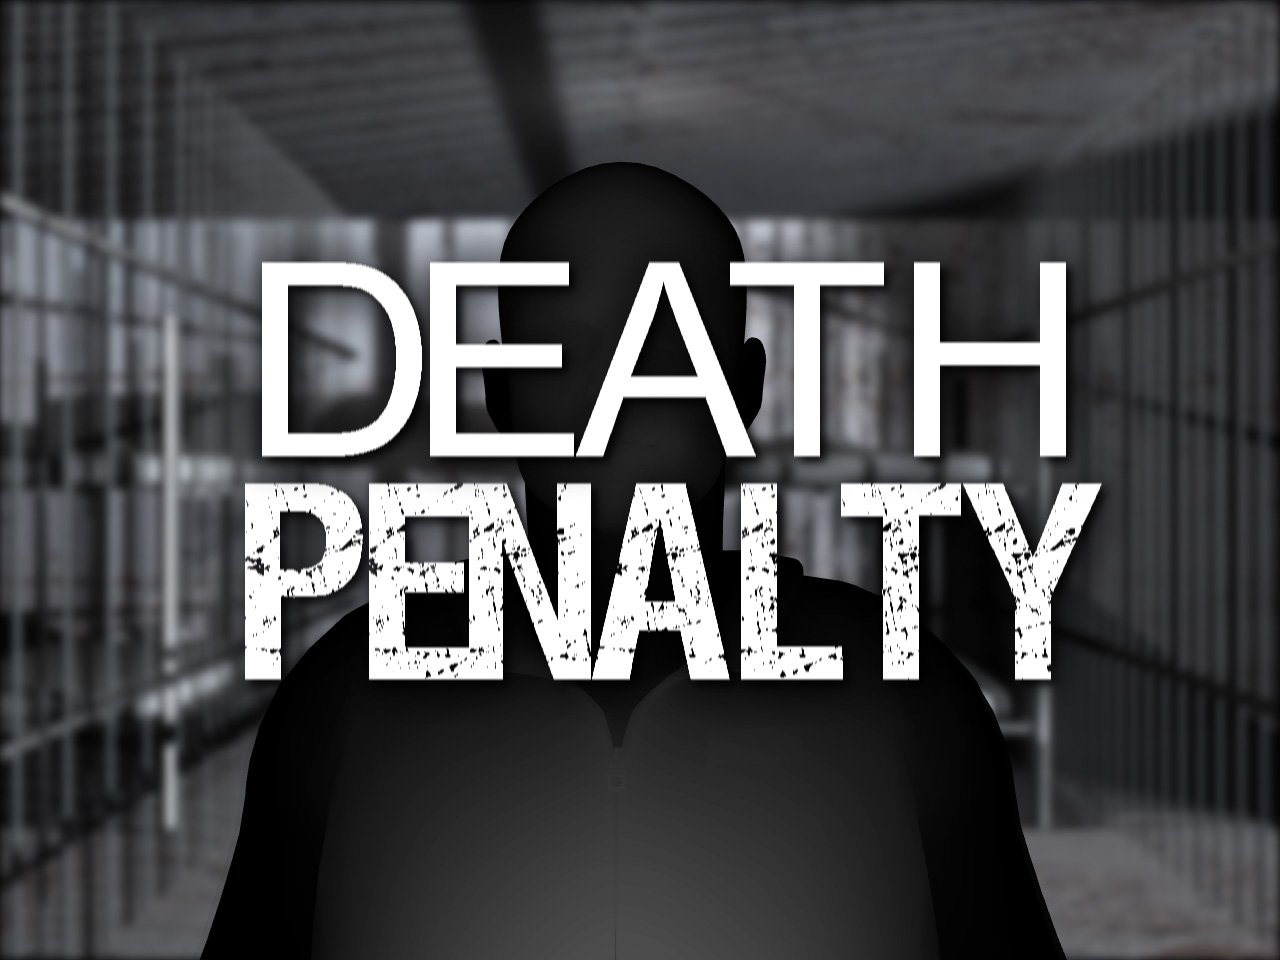 Abolishing Death Penalty